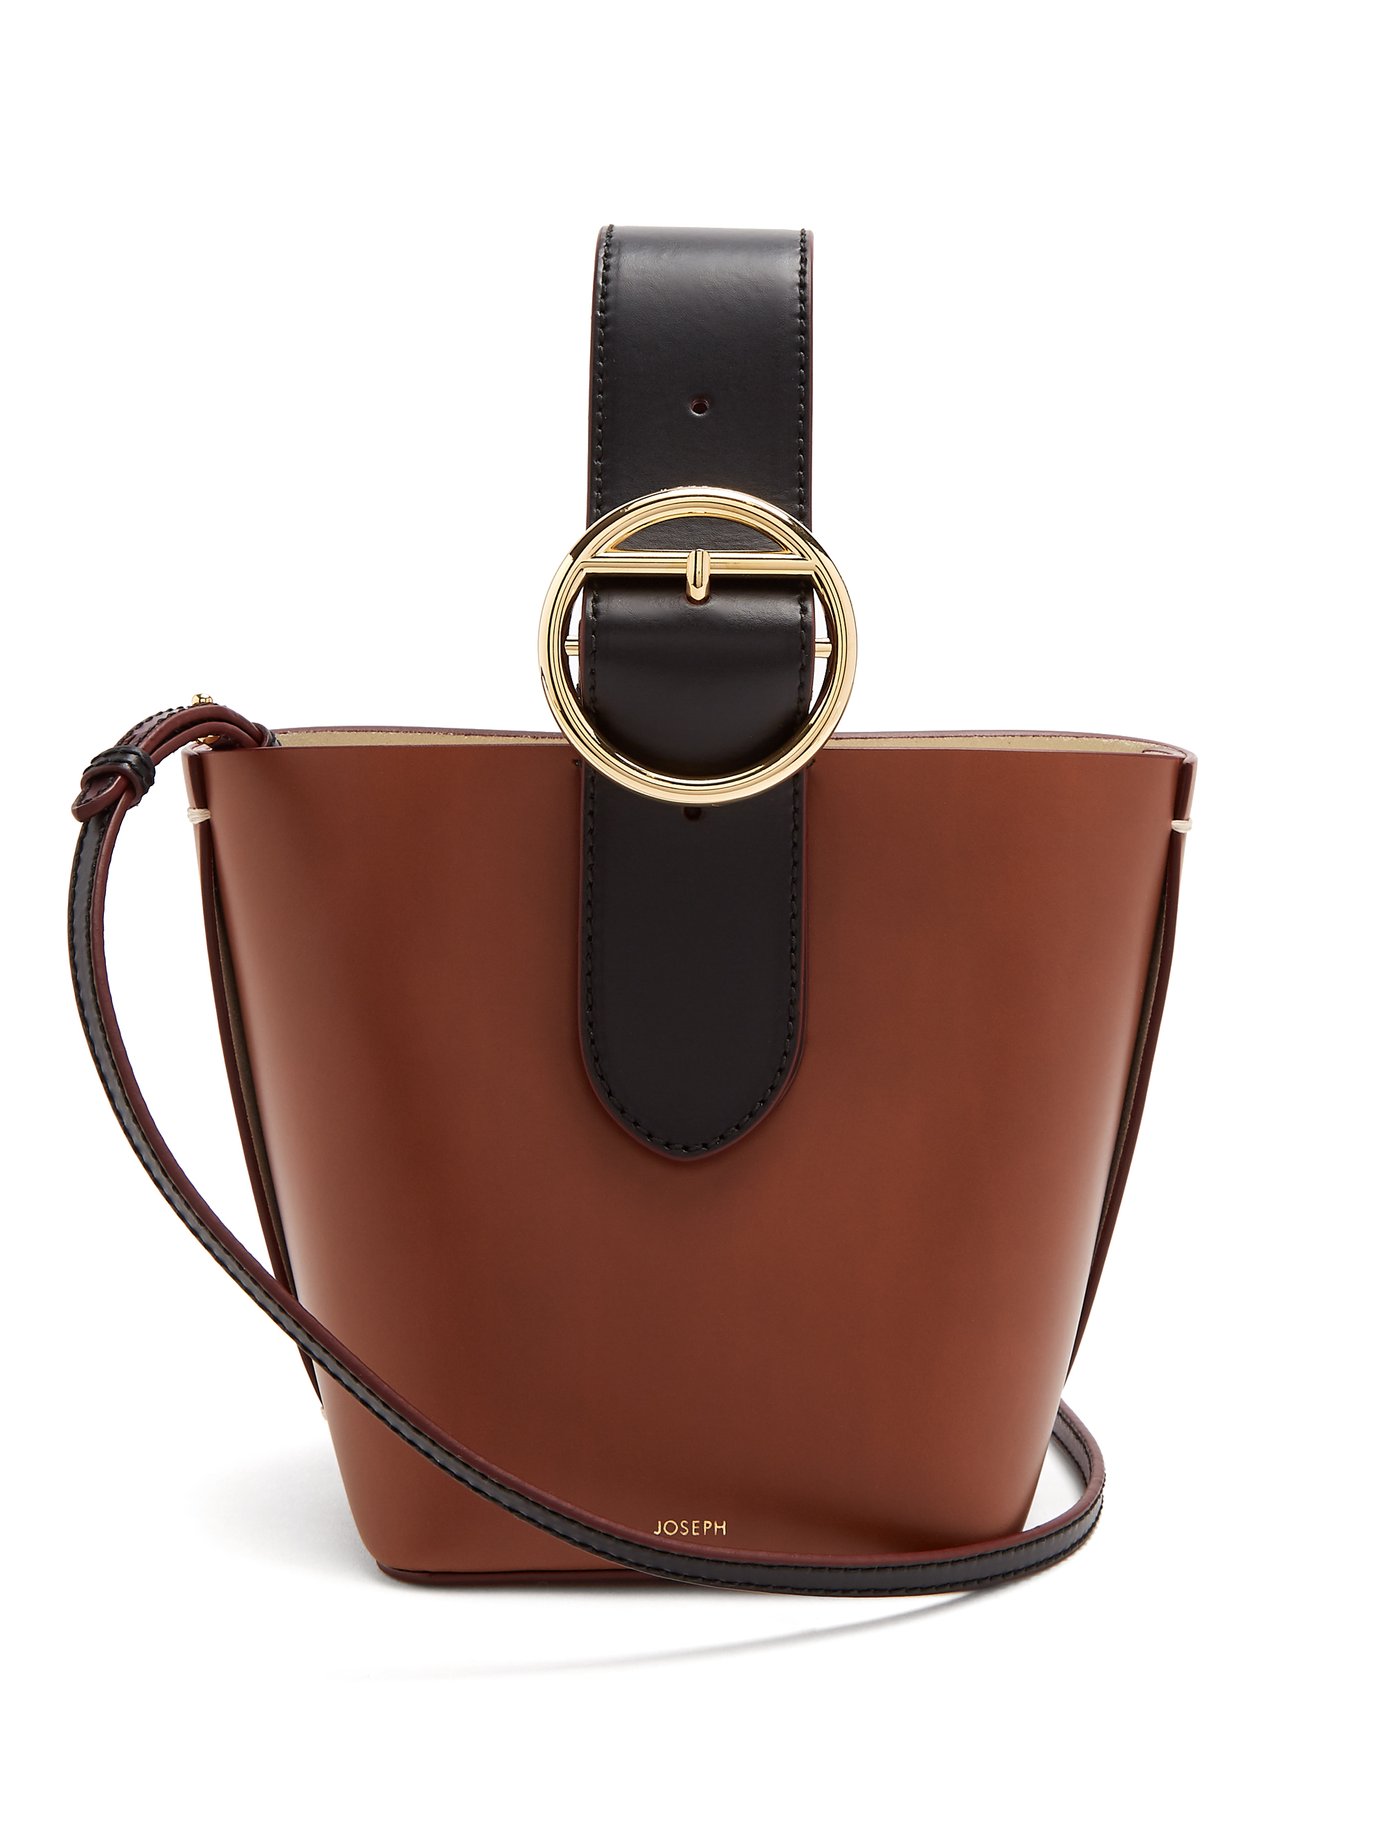 Joseph Sevres mini buckle-handle leather bag